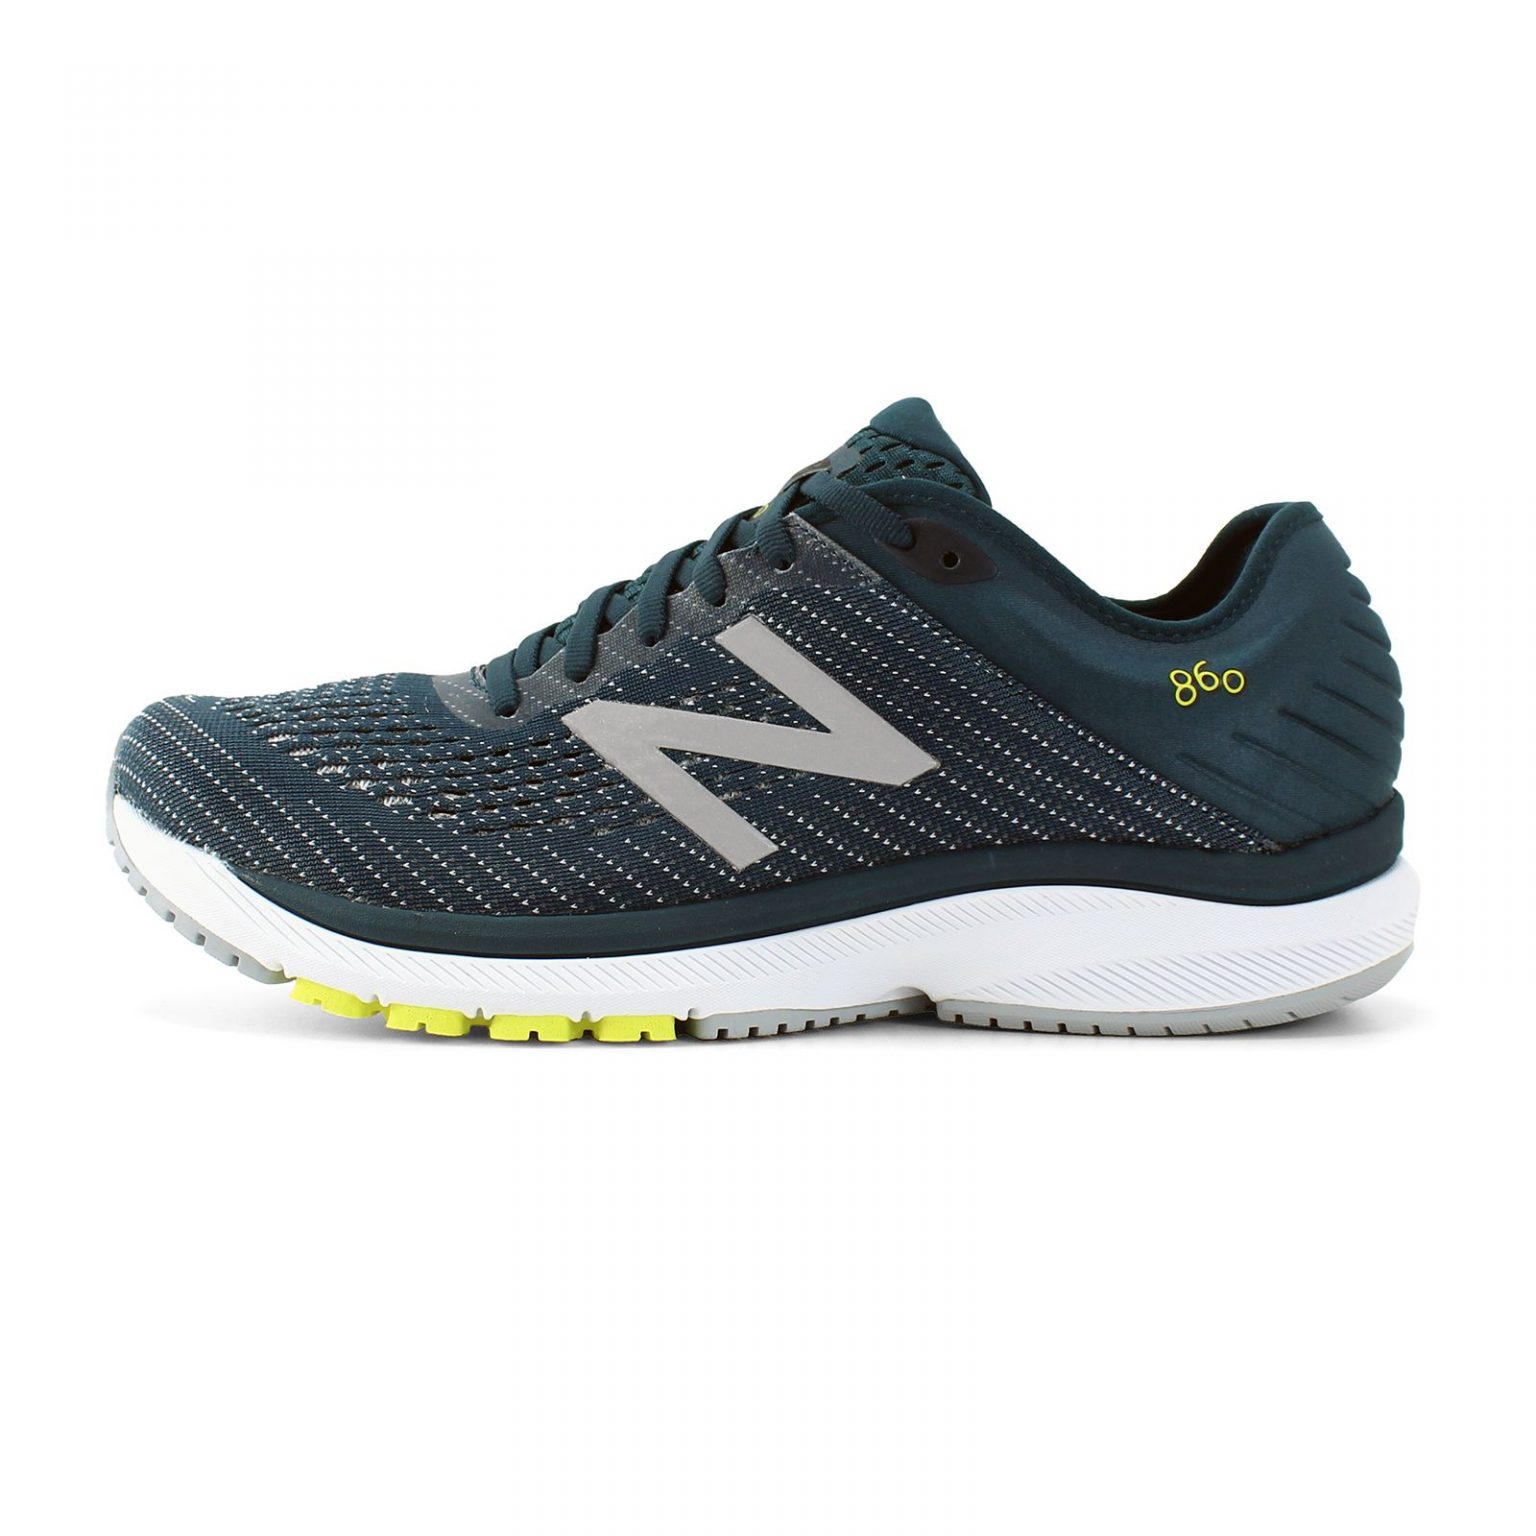 New Balance 860v10: Running Shoes Review | Runner Expert